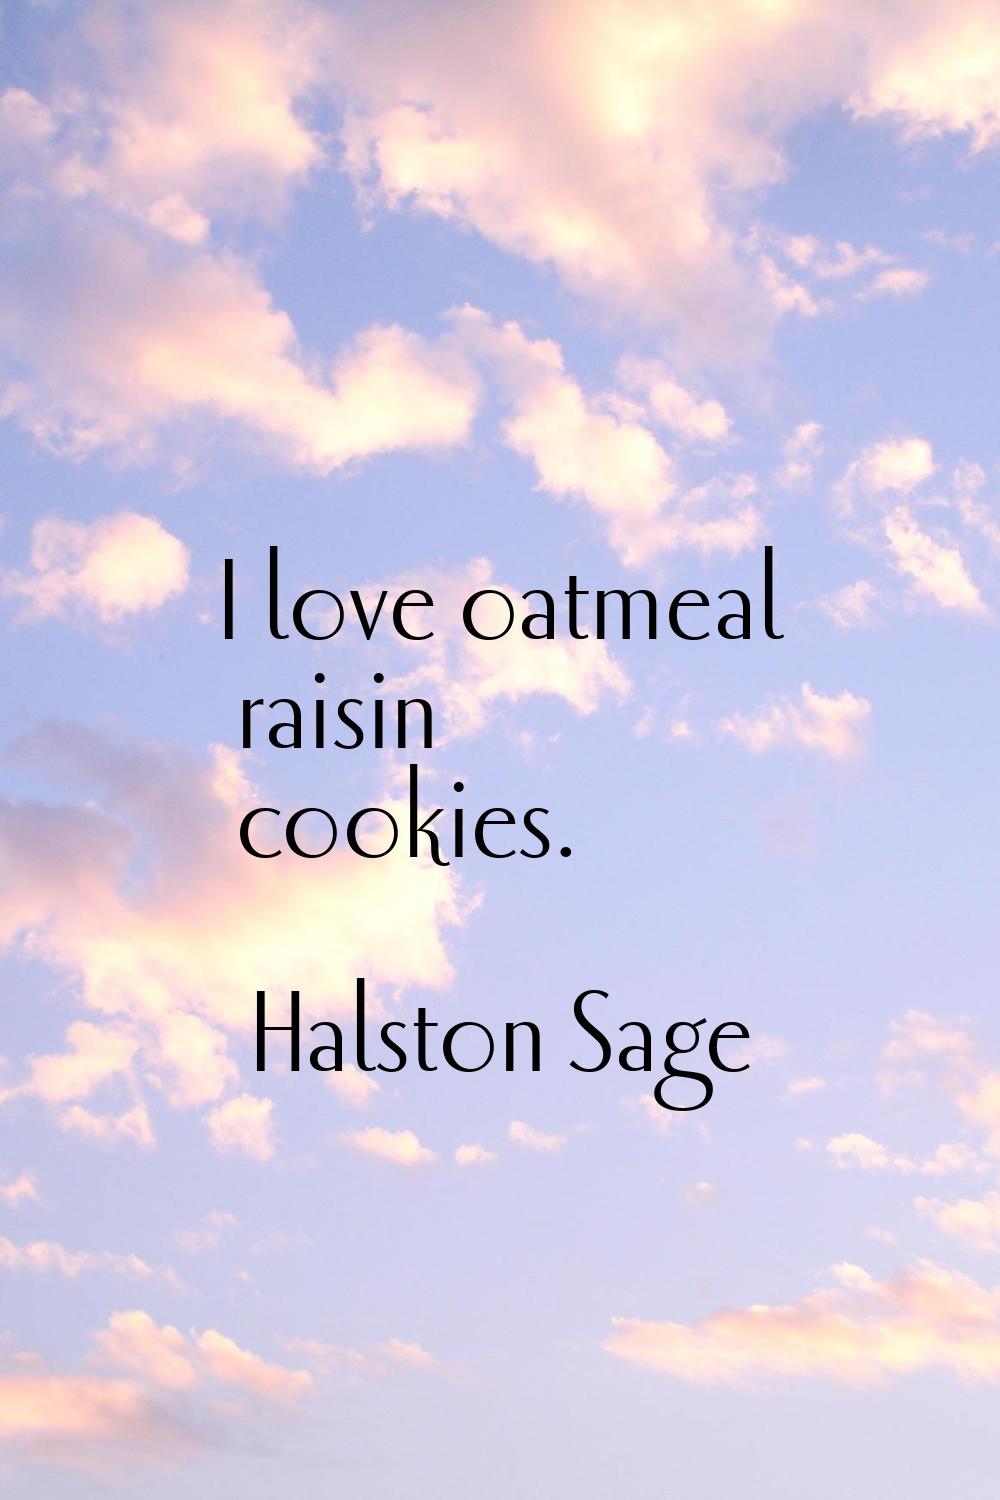 I love oatmeal raisin cookies.